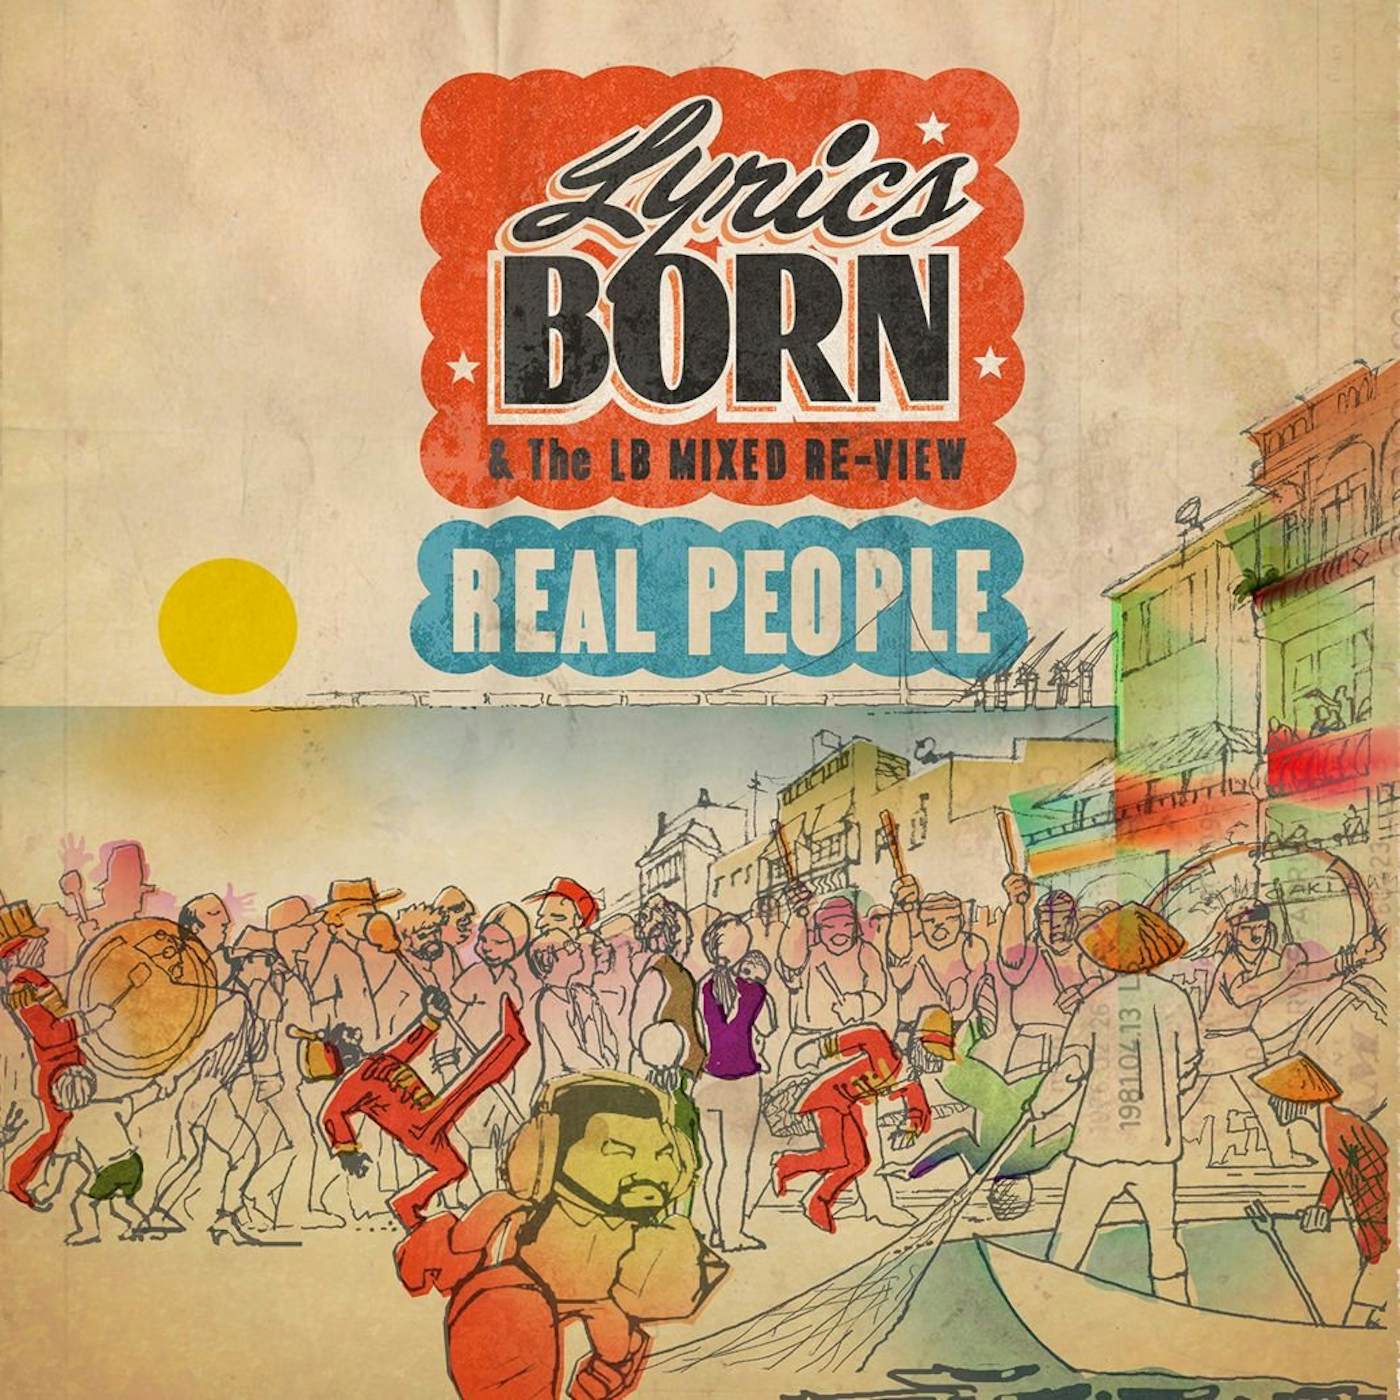 Lyrics Born REAL PEOPLE CD